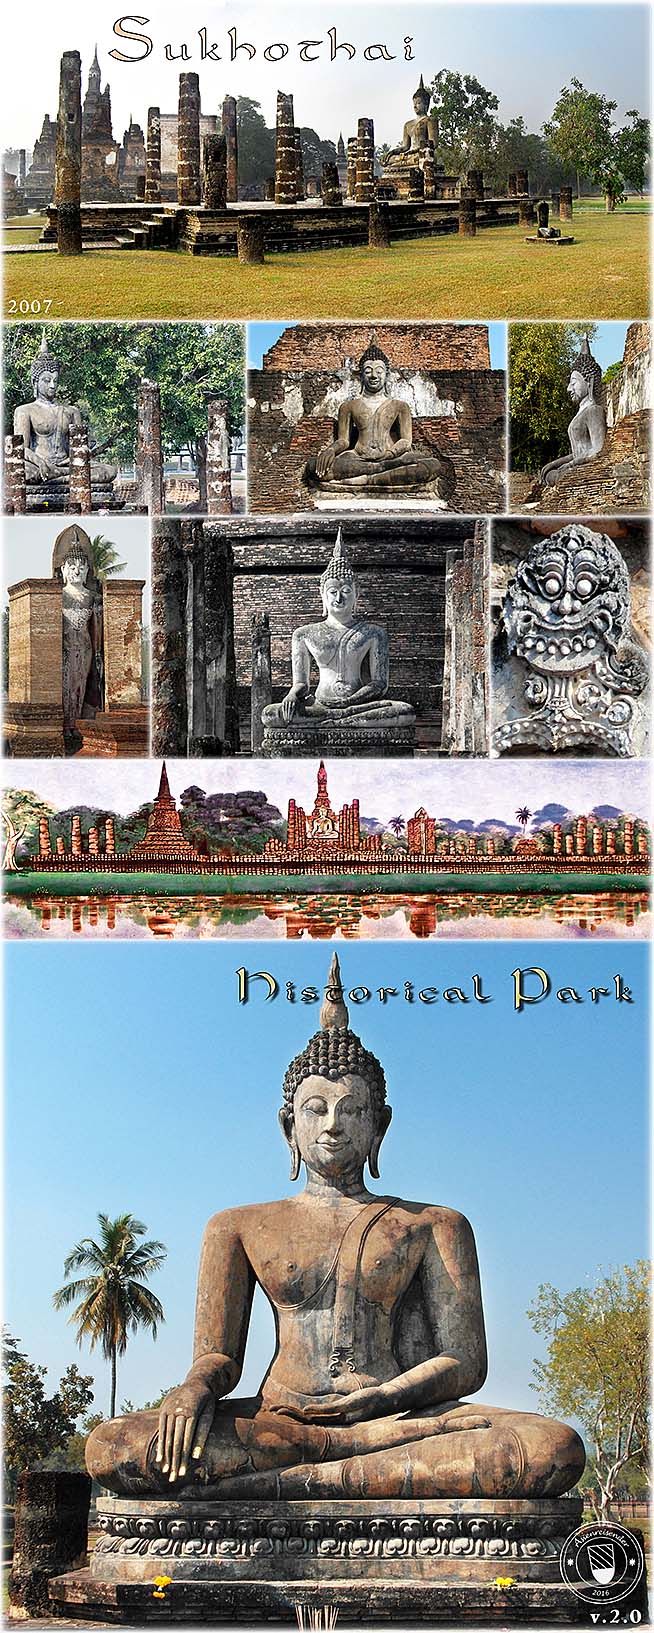 'Buddha Statues in Sukhothai Historical Park' by Asienreisender